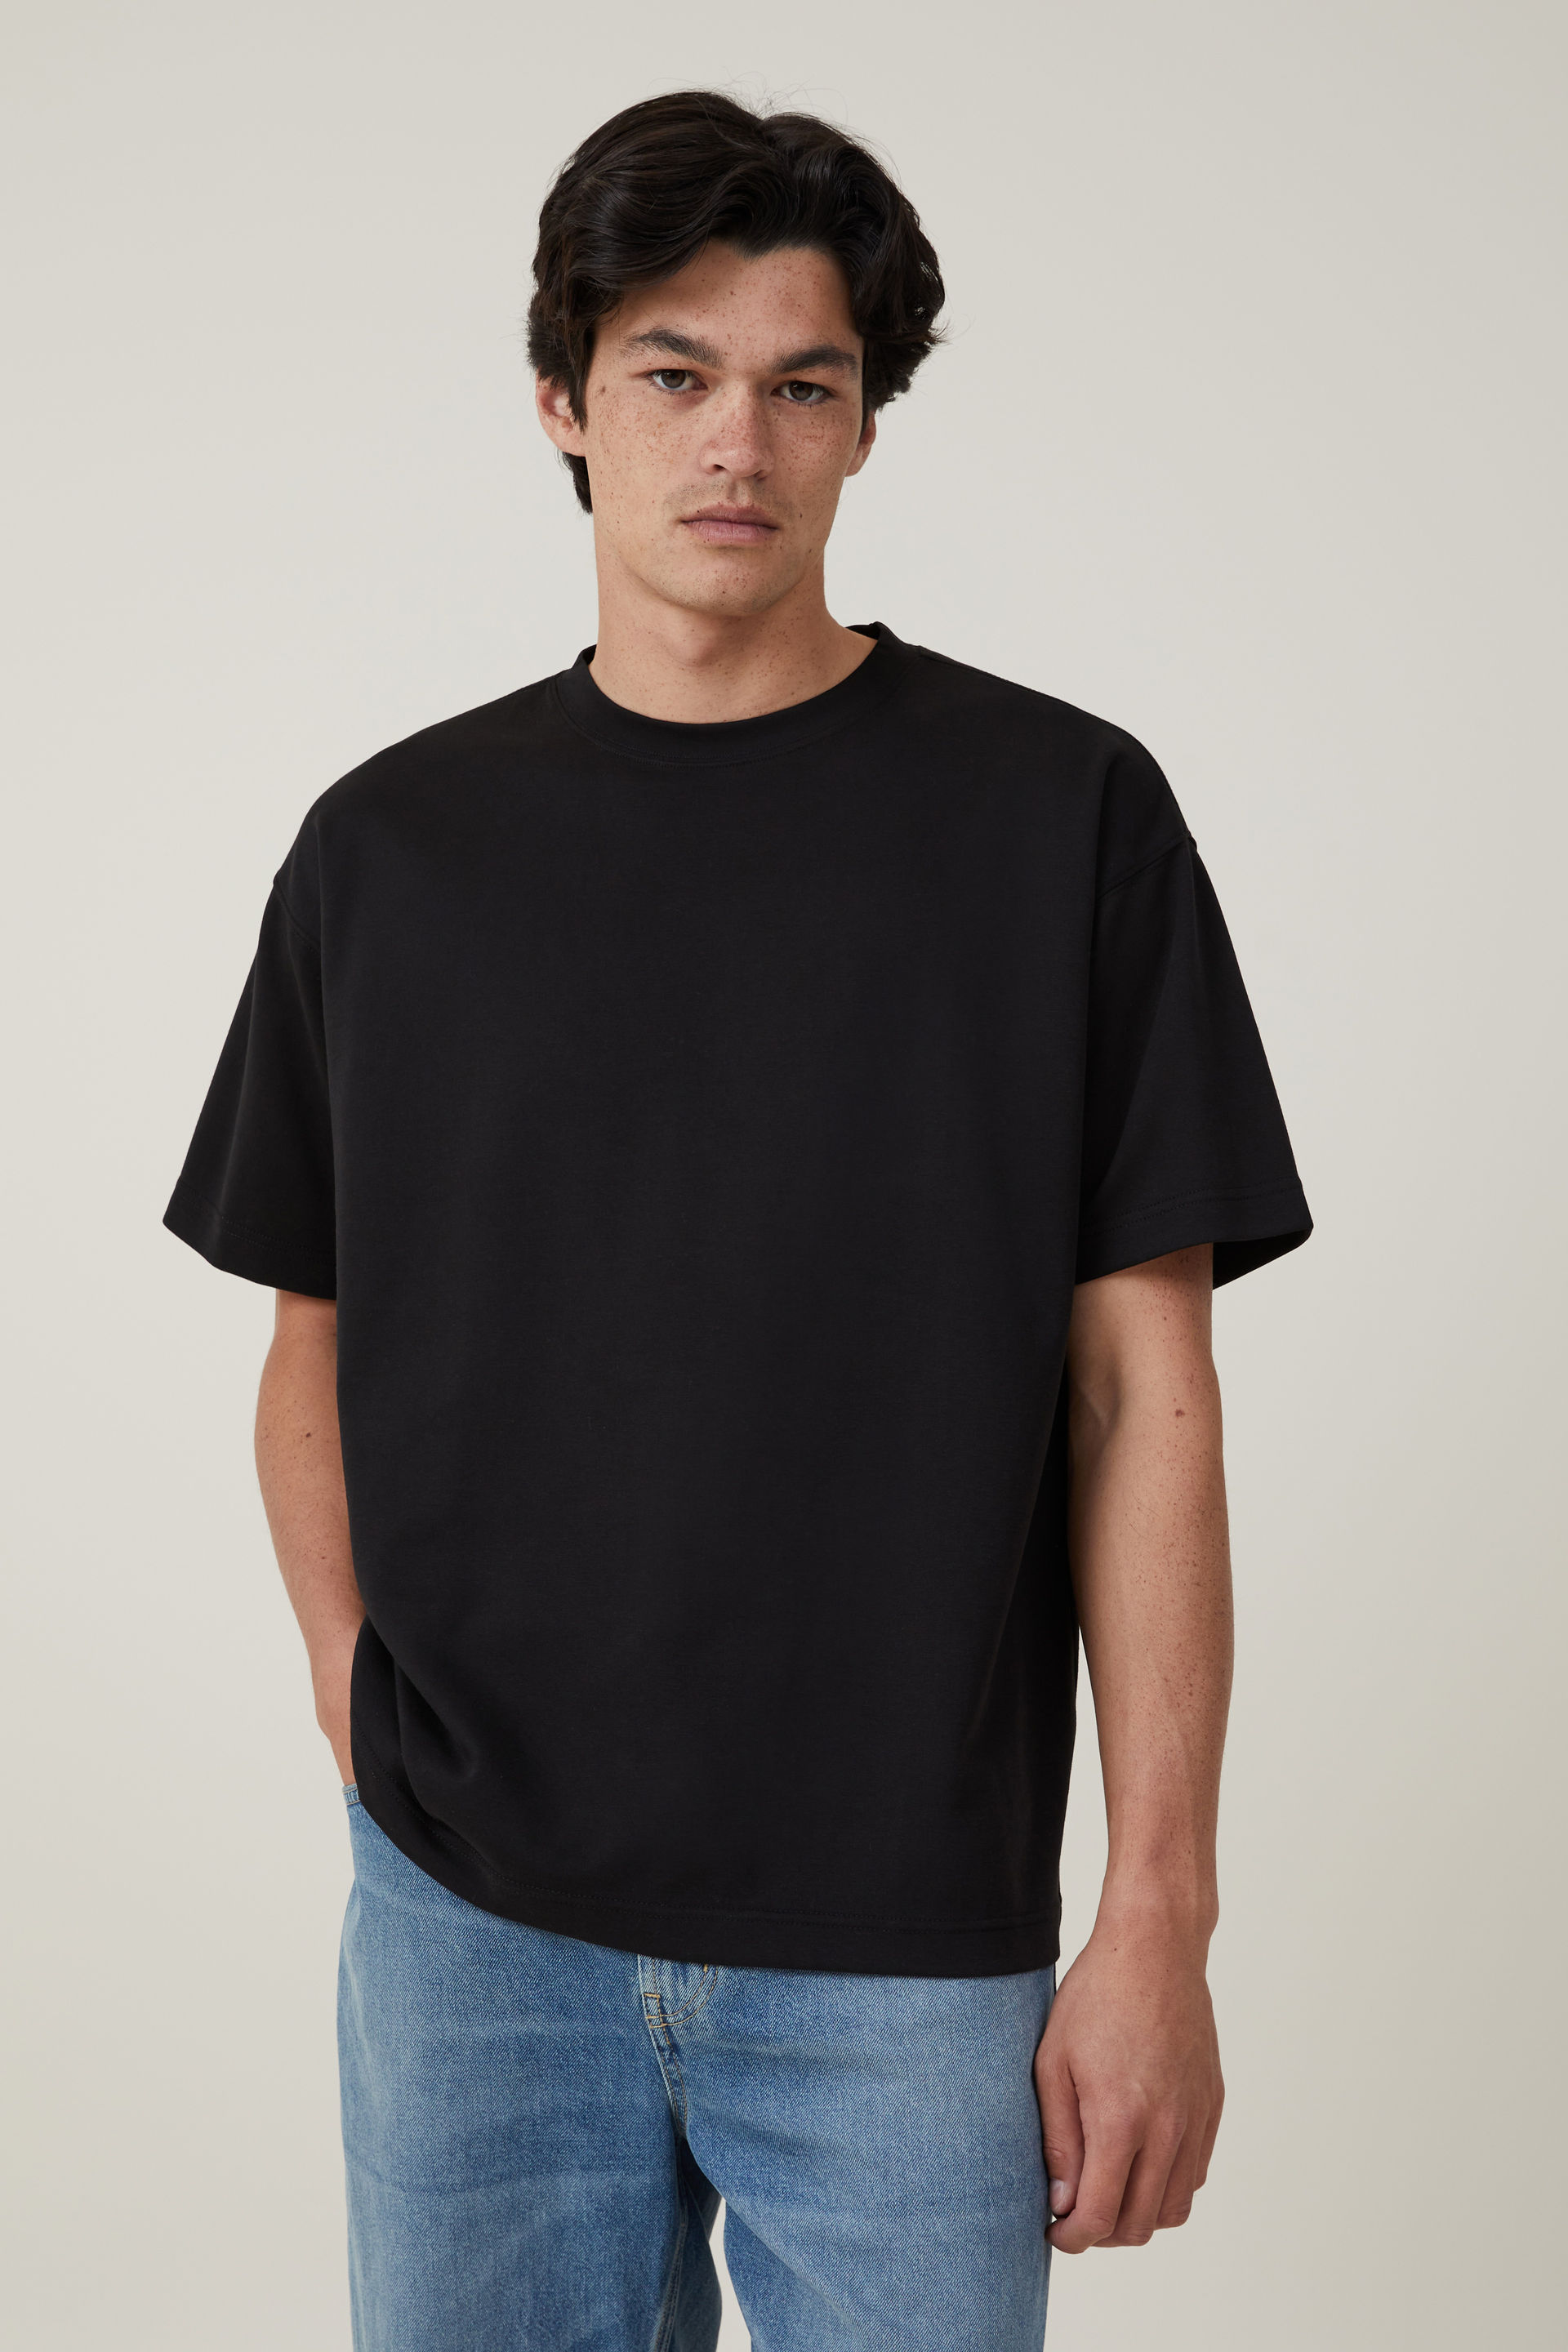 Cotton On Men - Hyperweave T-Shirt - Black